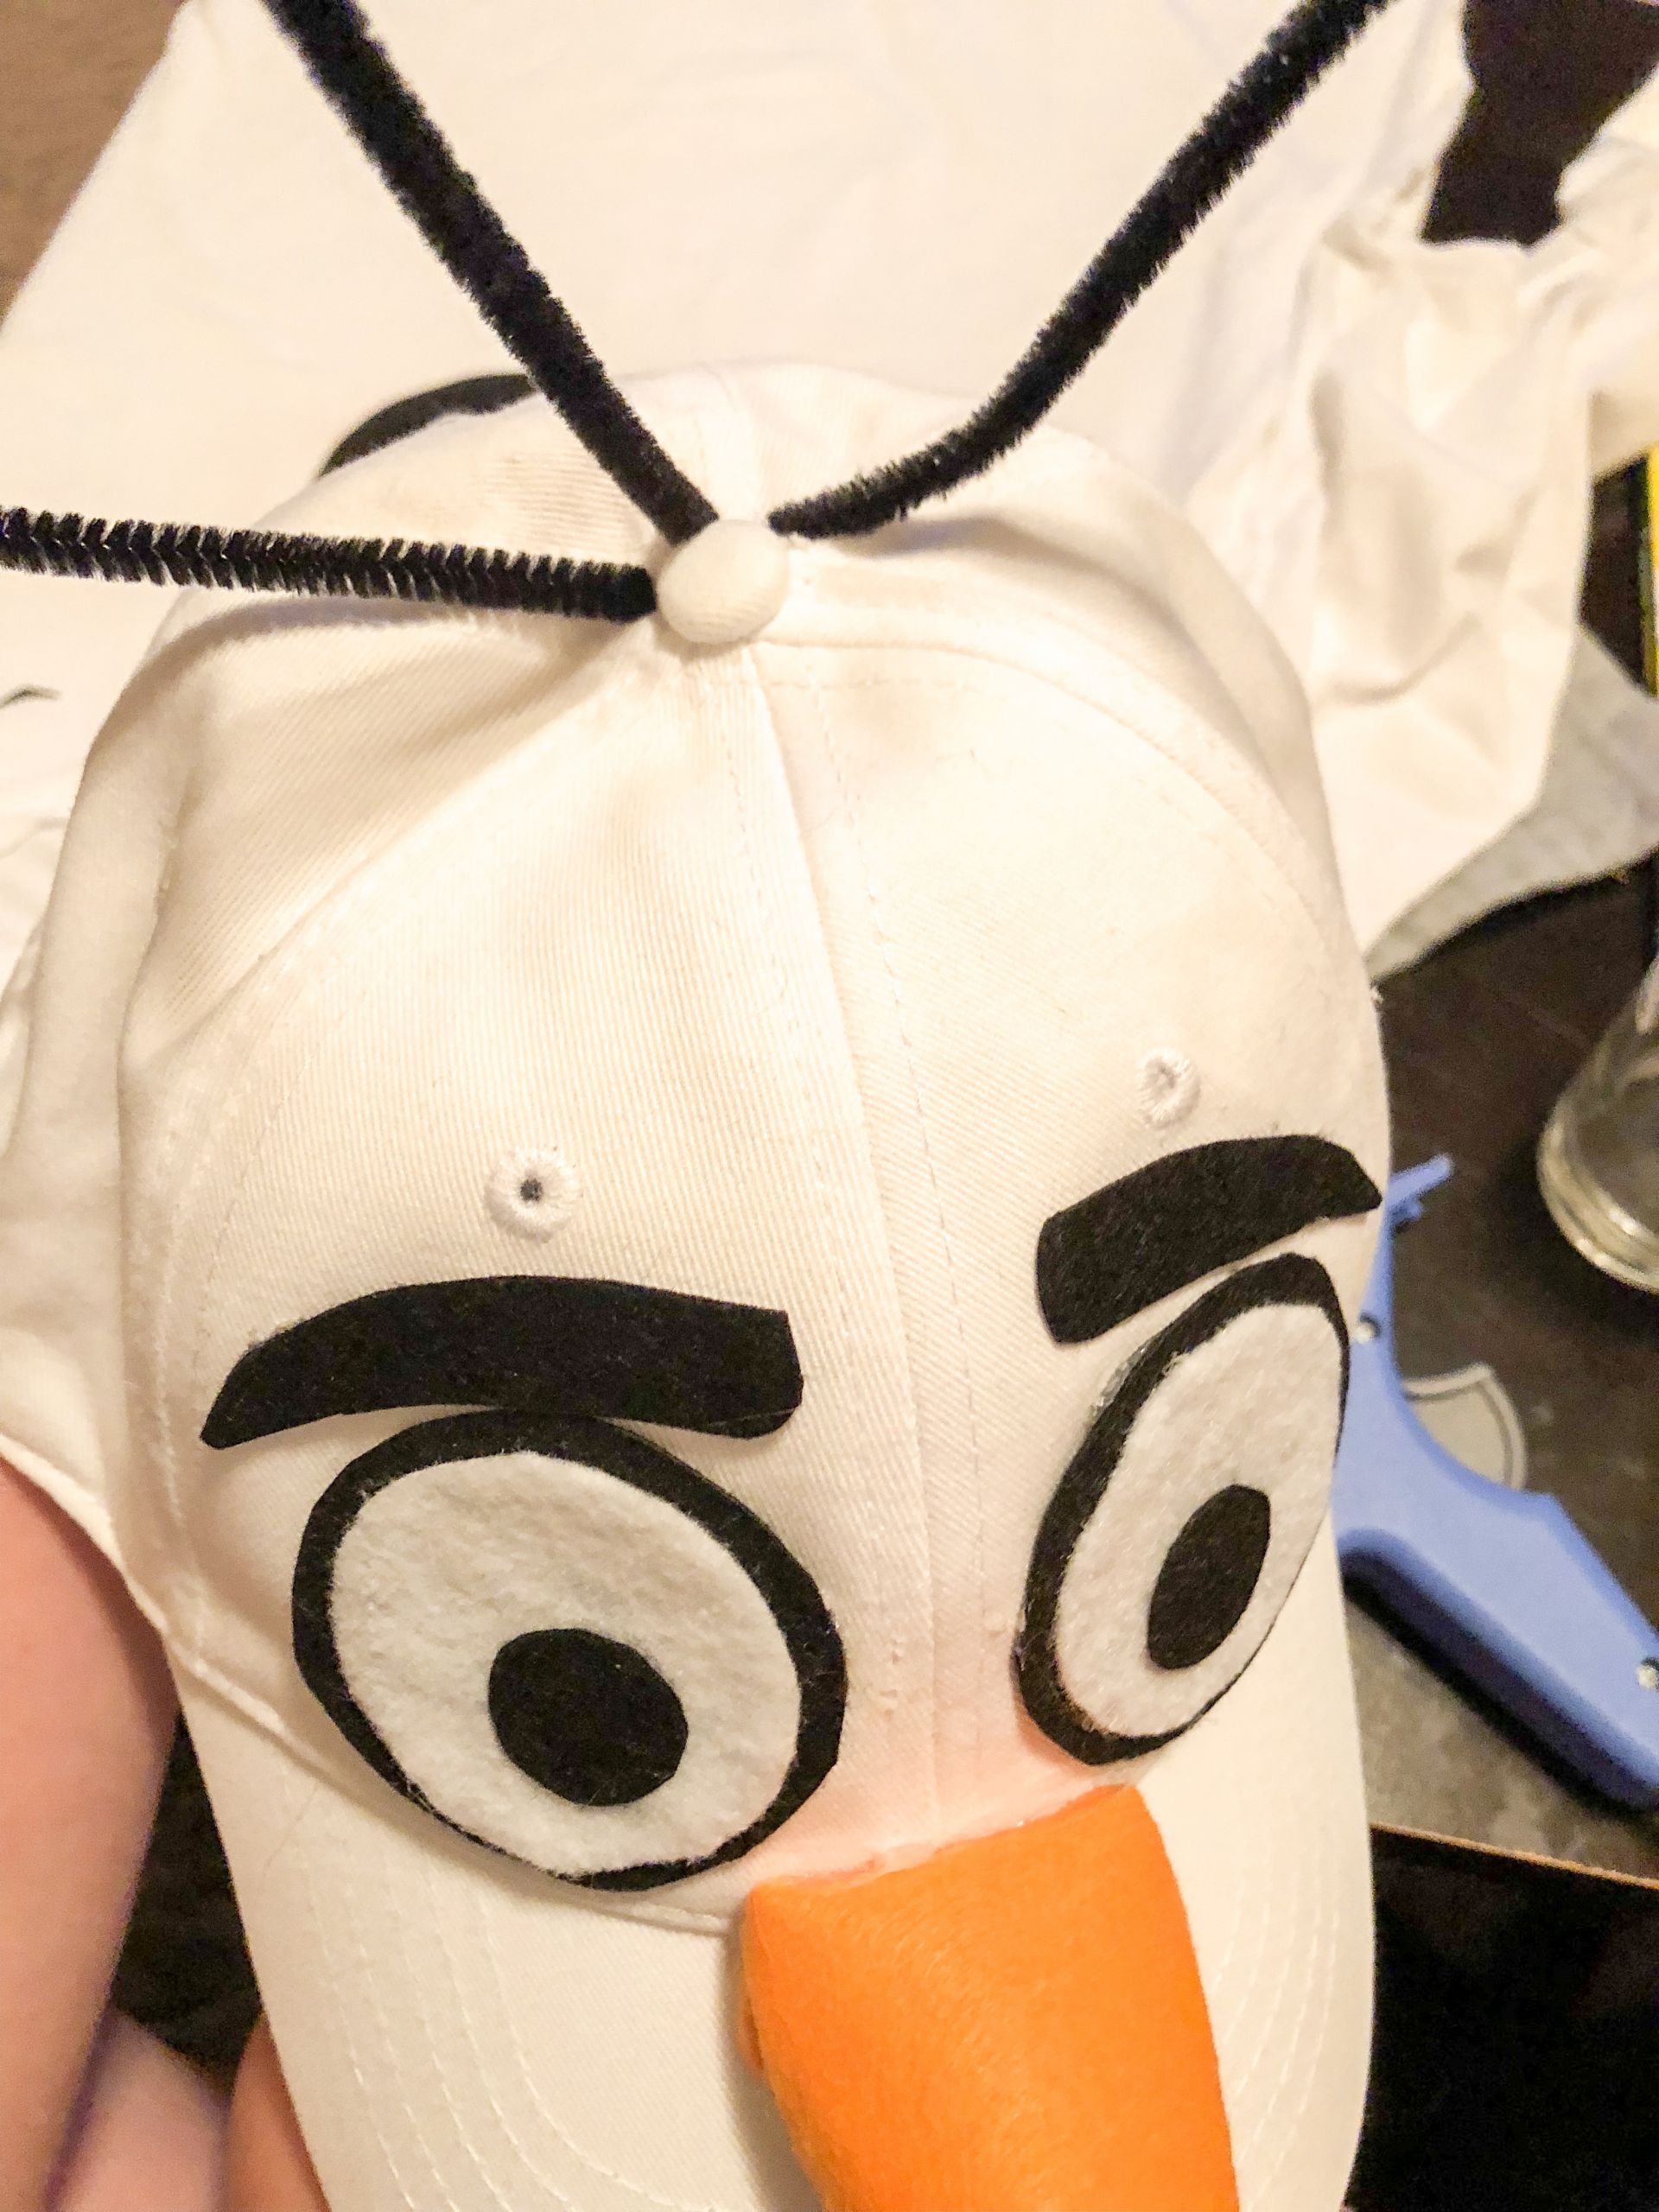 DIY Olaf Costume For Adults
 DIY Olaf Costume Poppy Grace